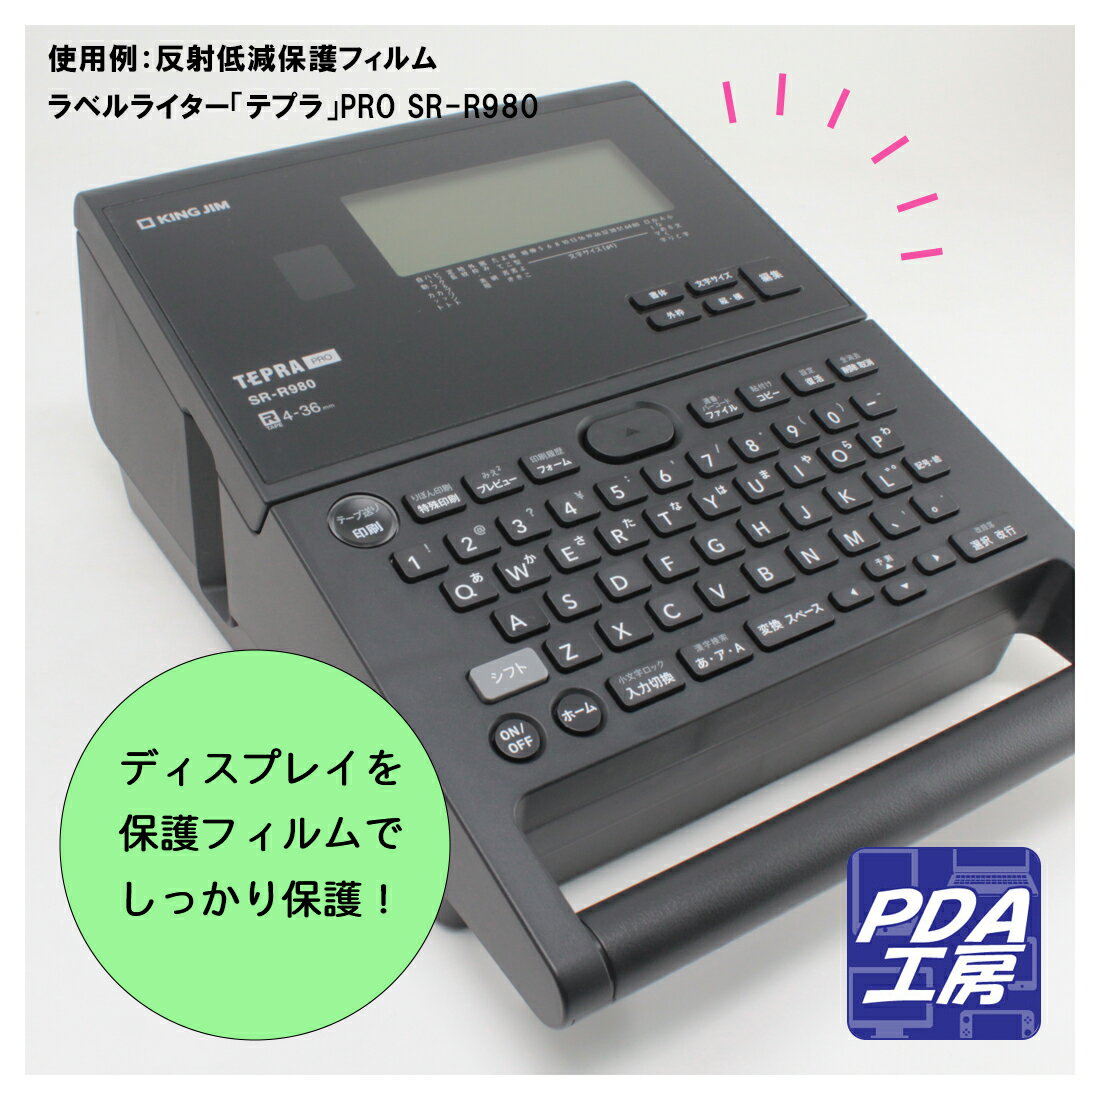 PDA工房 ラベルライター「テプラ」PRO SR-R980対応 Crystal Shield 保護 フィルム 3枚入 光沢 日本製 自社製造直販 3